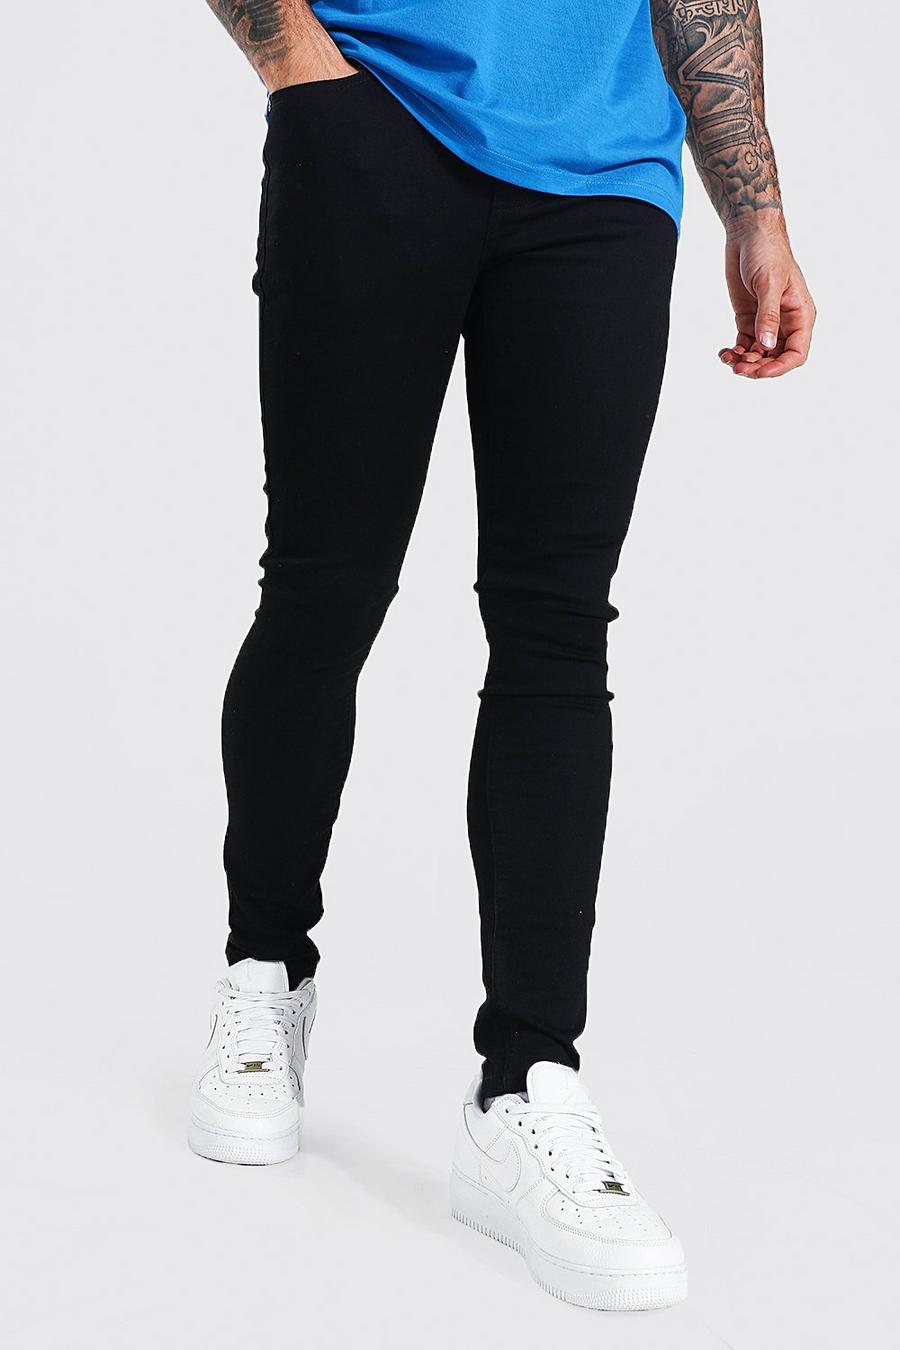 Black schwarz Super Skinny Fit Jean Contains Organic Cotton